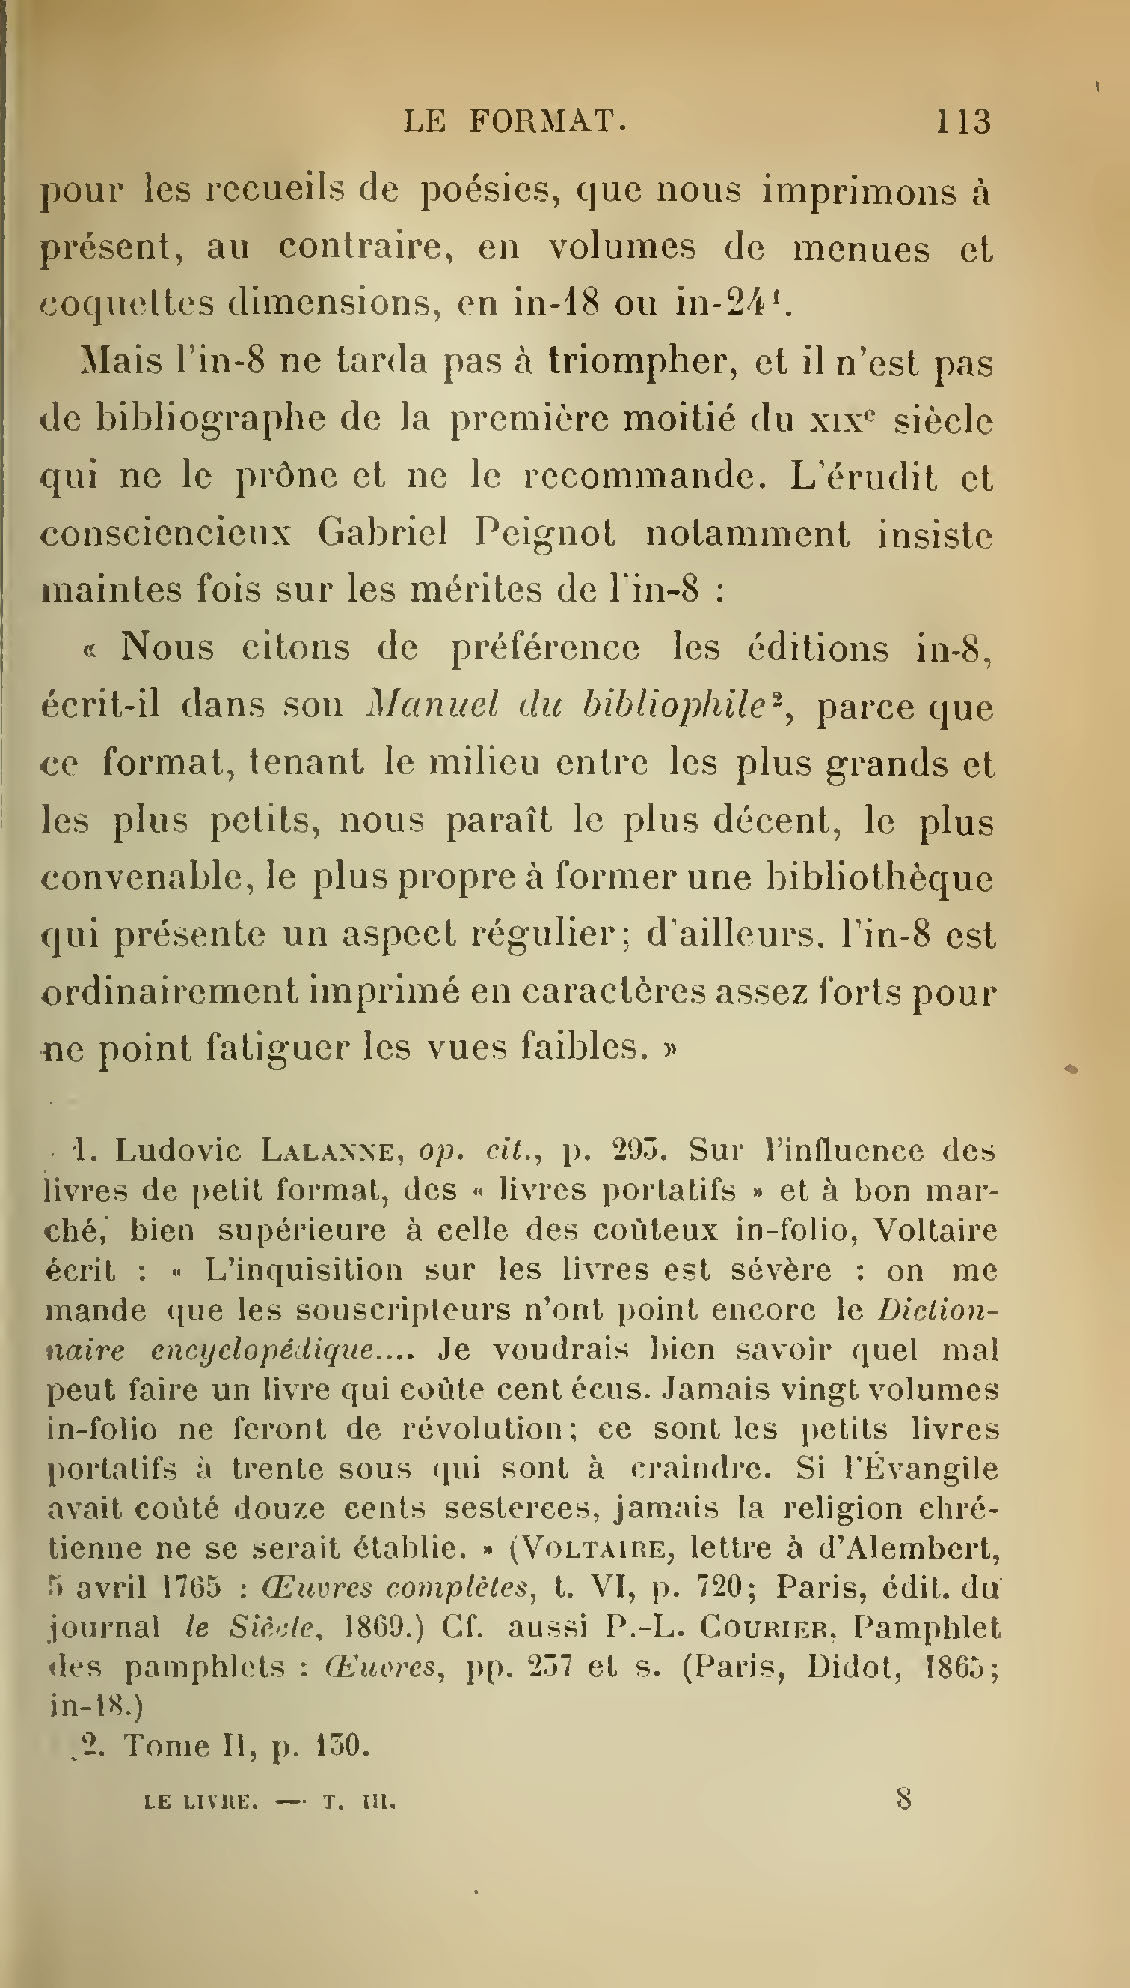 Albert Cim, Le Livre, t. III, p. 113.